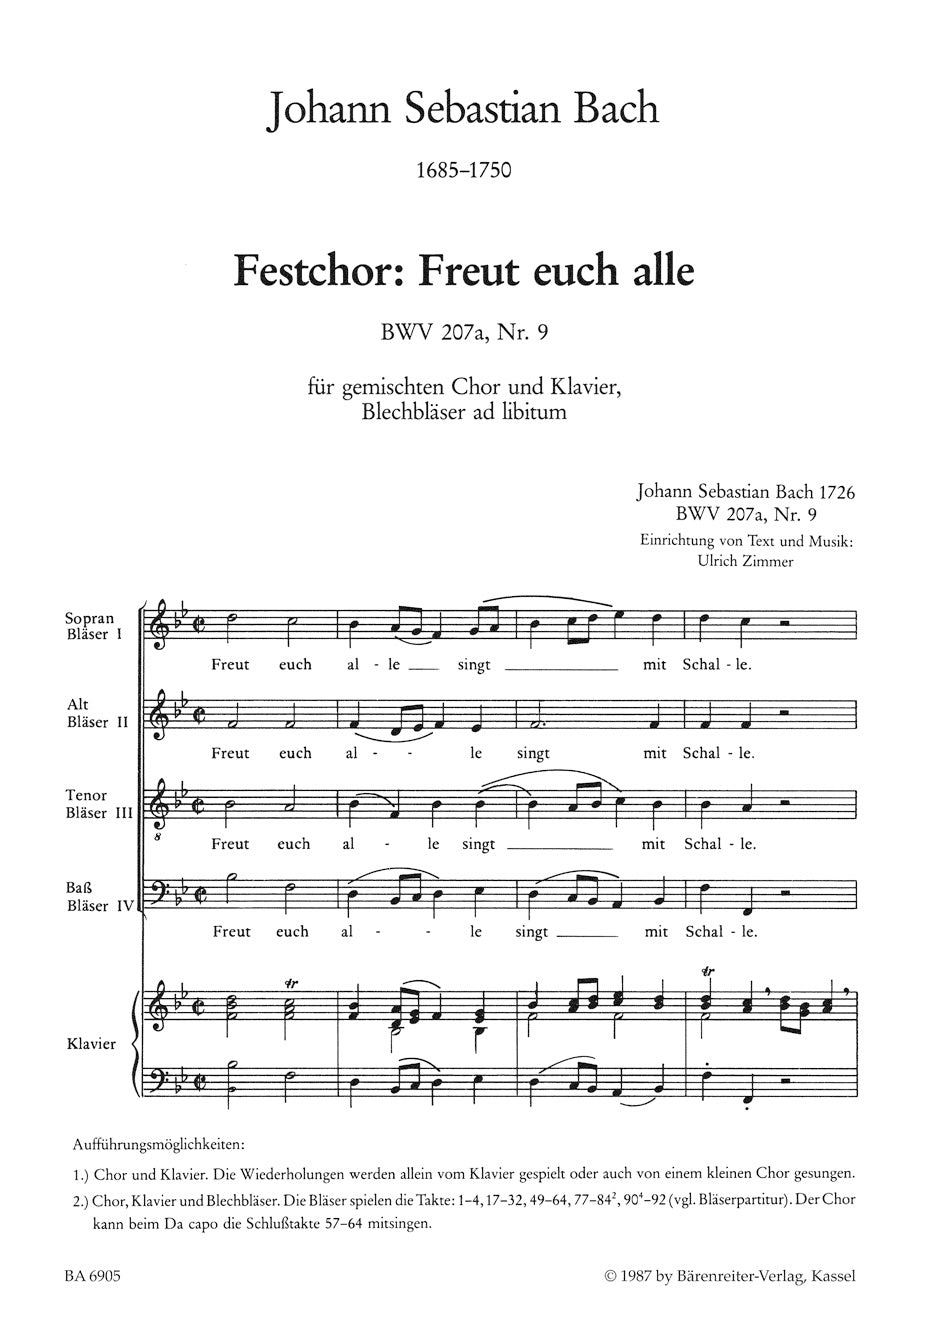 Bach: Freut euch alle, BWV 207a, No. 9